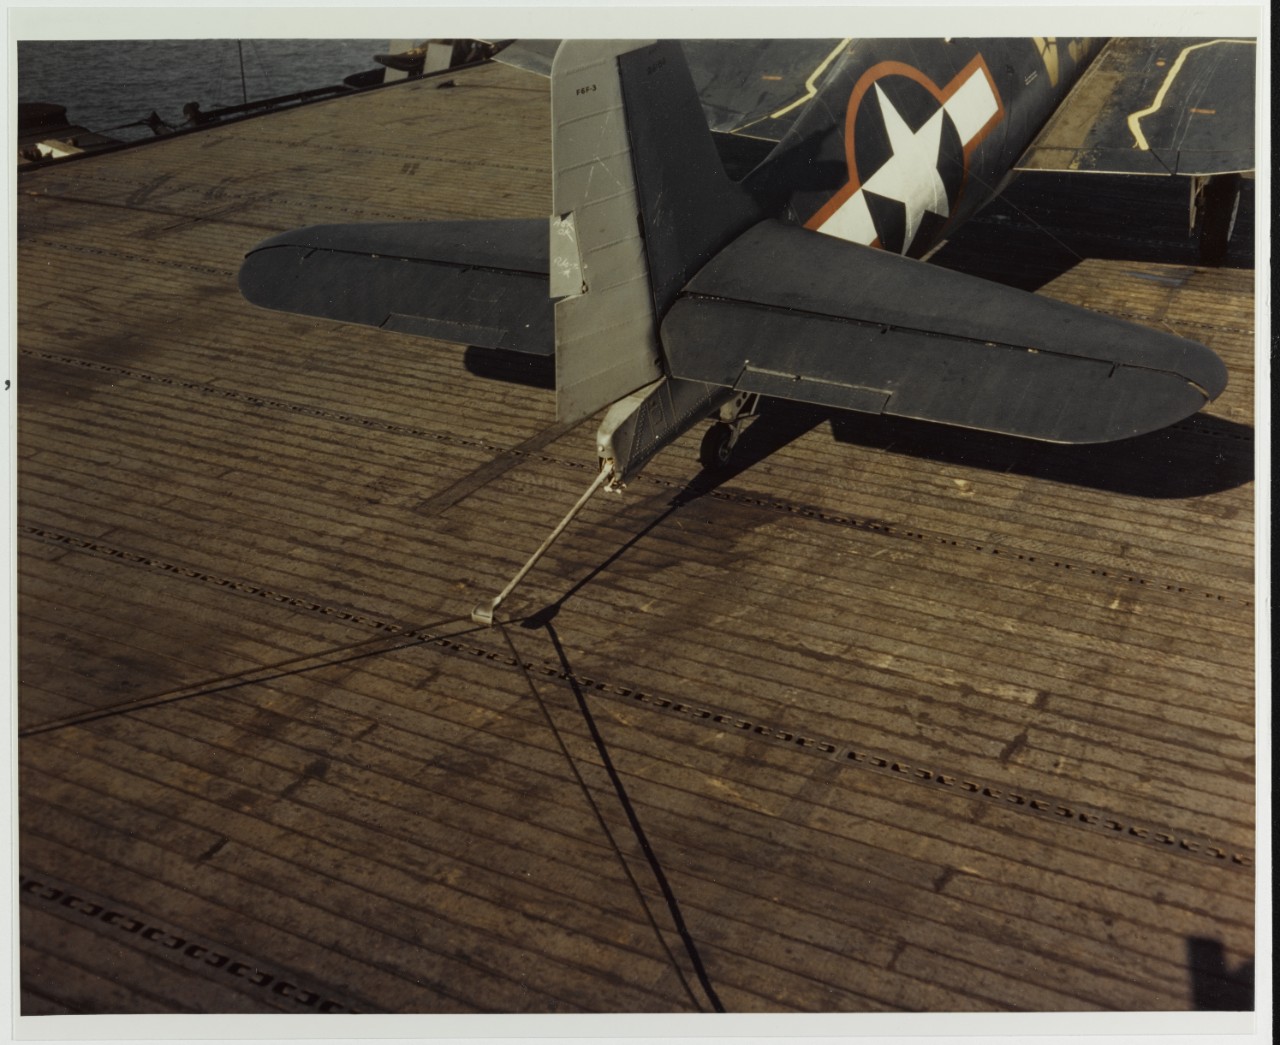 Grumman F6F-3 "Hellcat" (Bu# 26186 or 26188) makes an arrested landing on training escort carrier, circa mid 1943